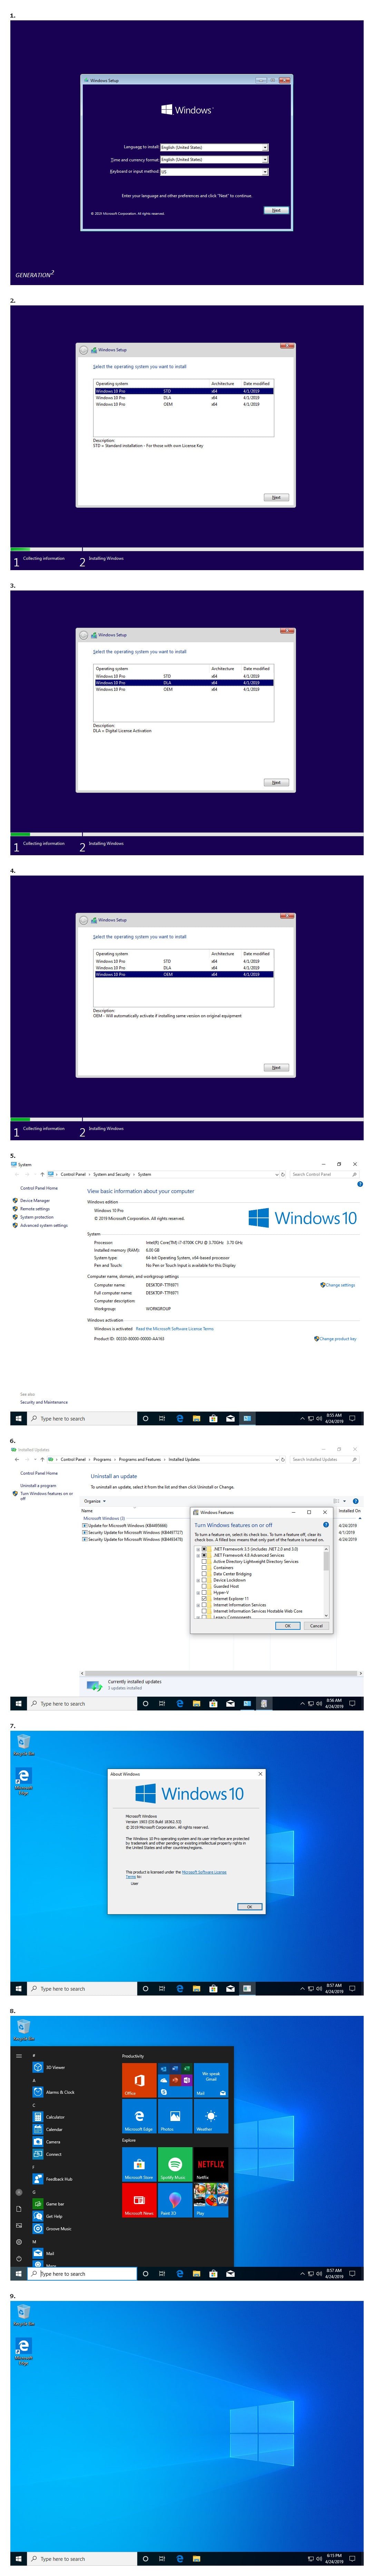 windows 10 pro oem download